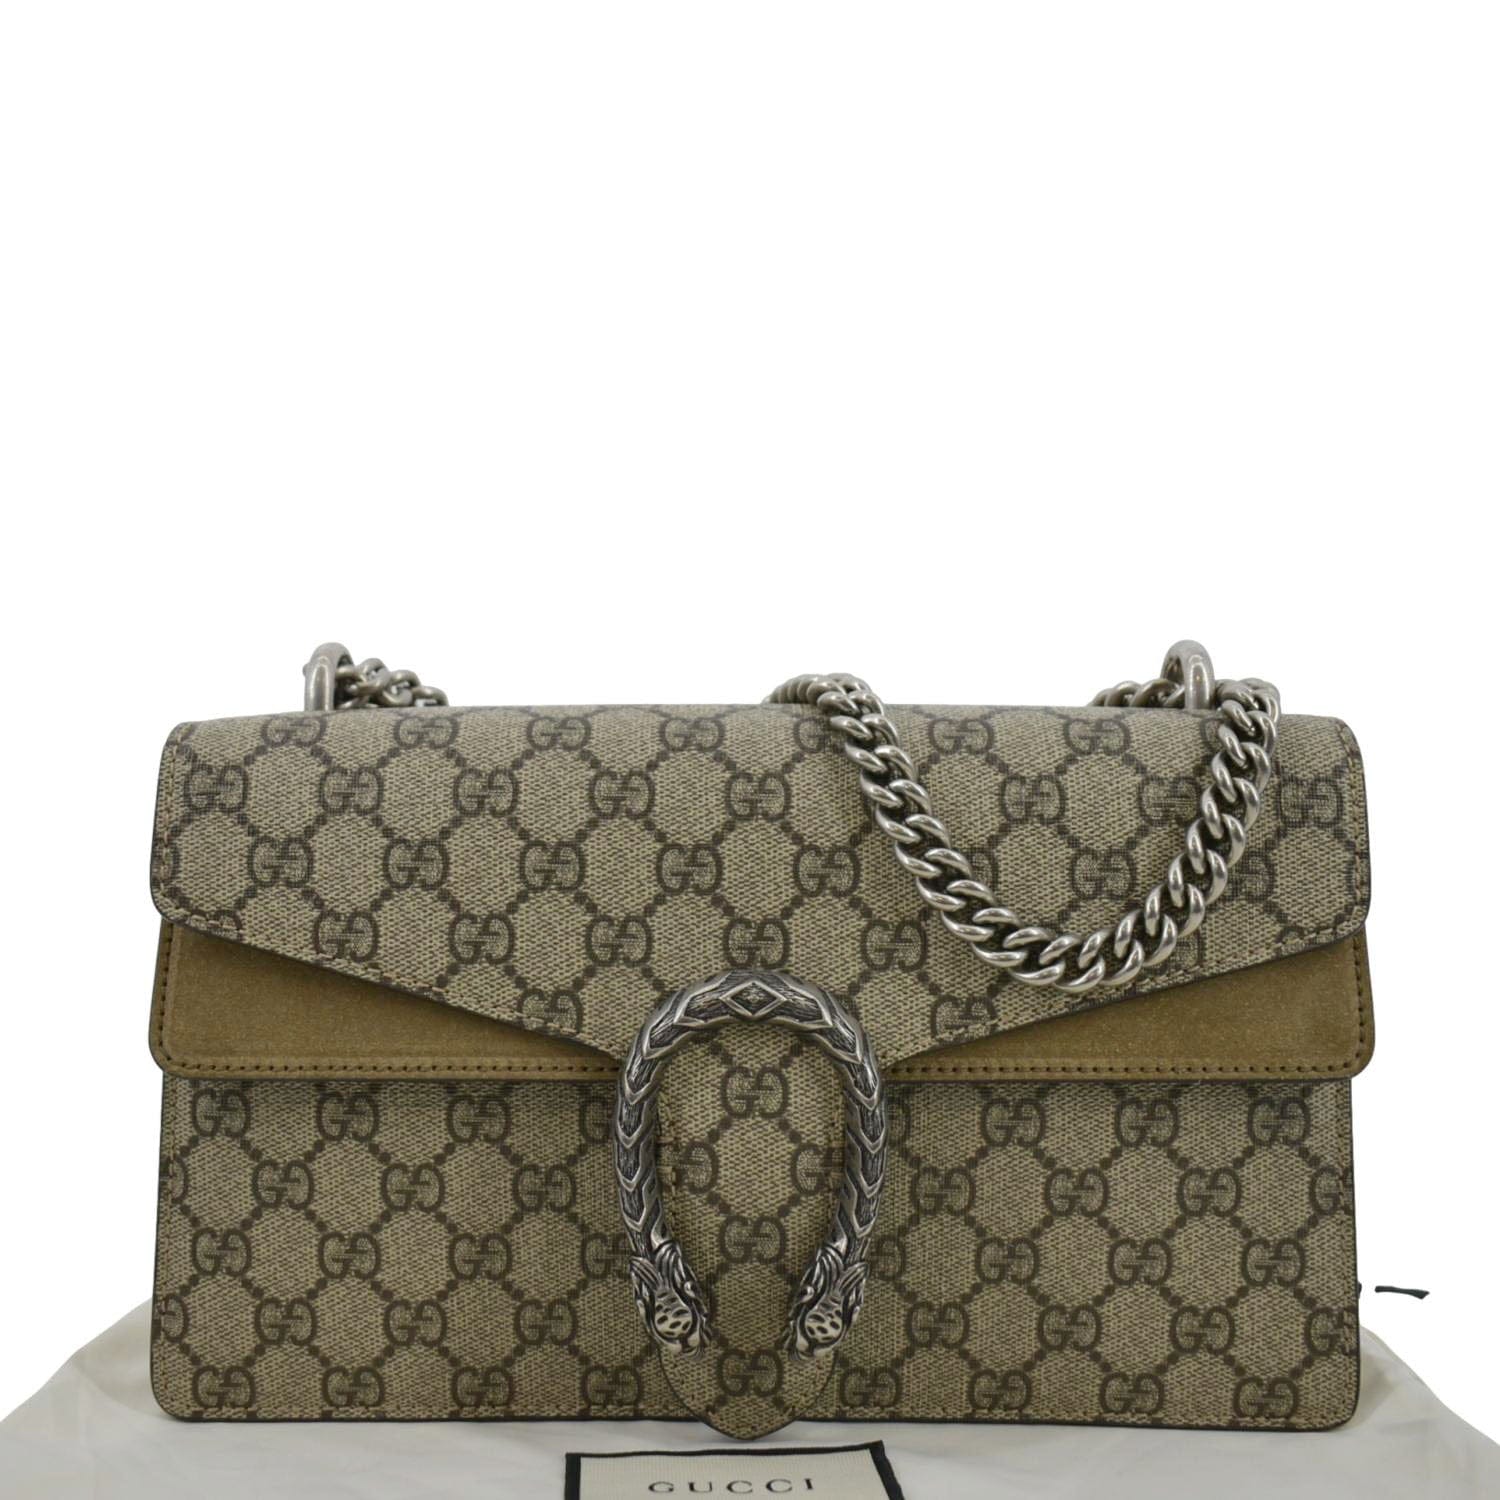 Gucci Beige Small Dionysus Bag